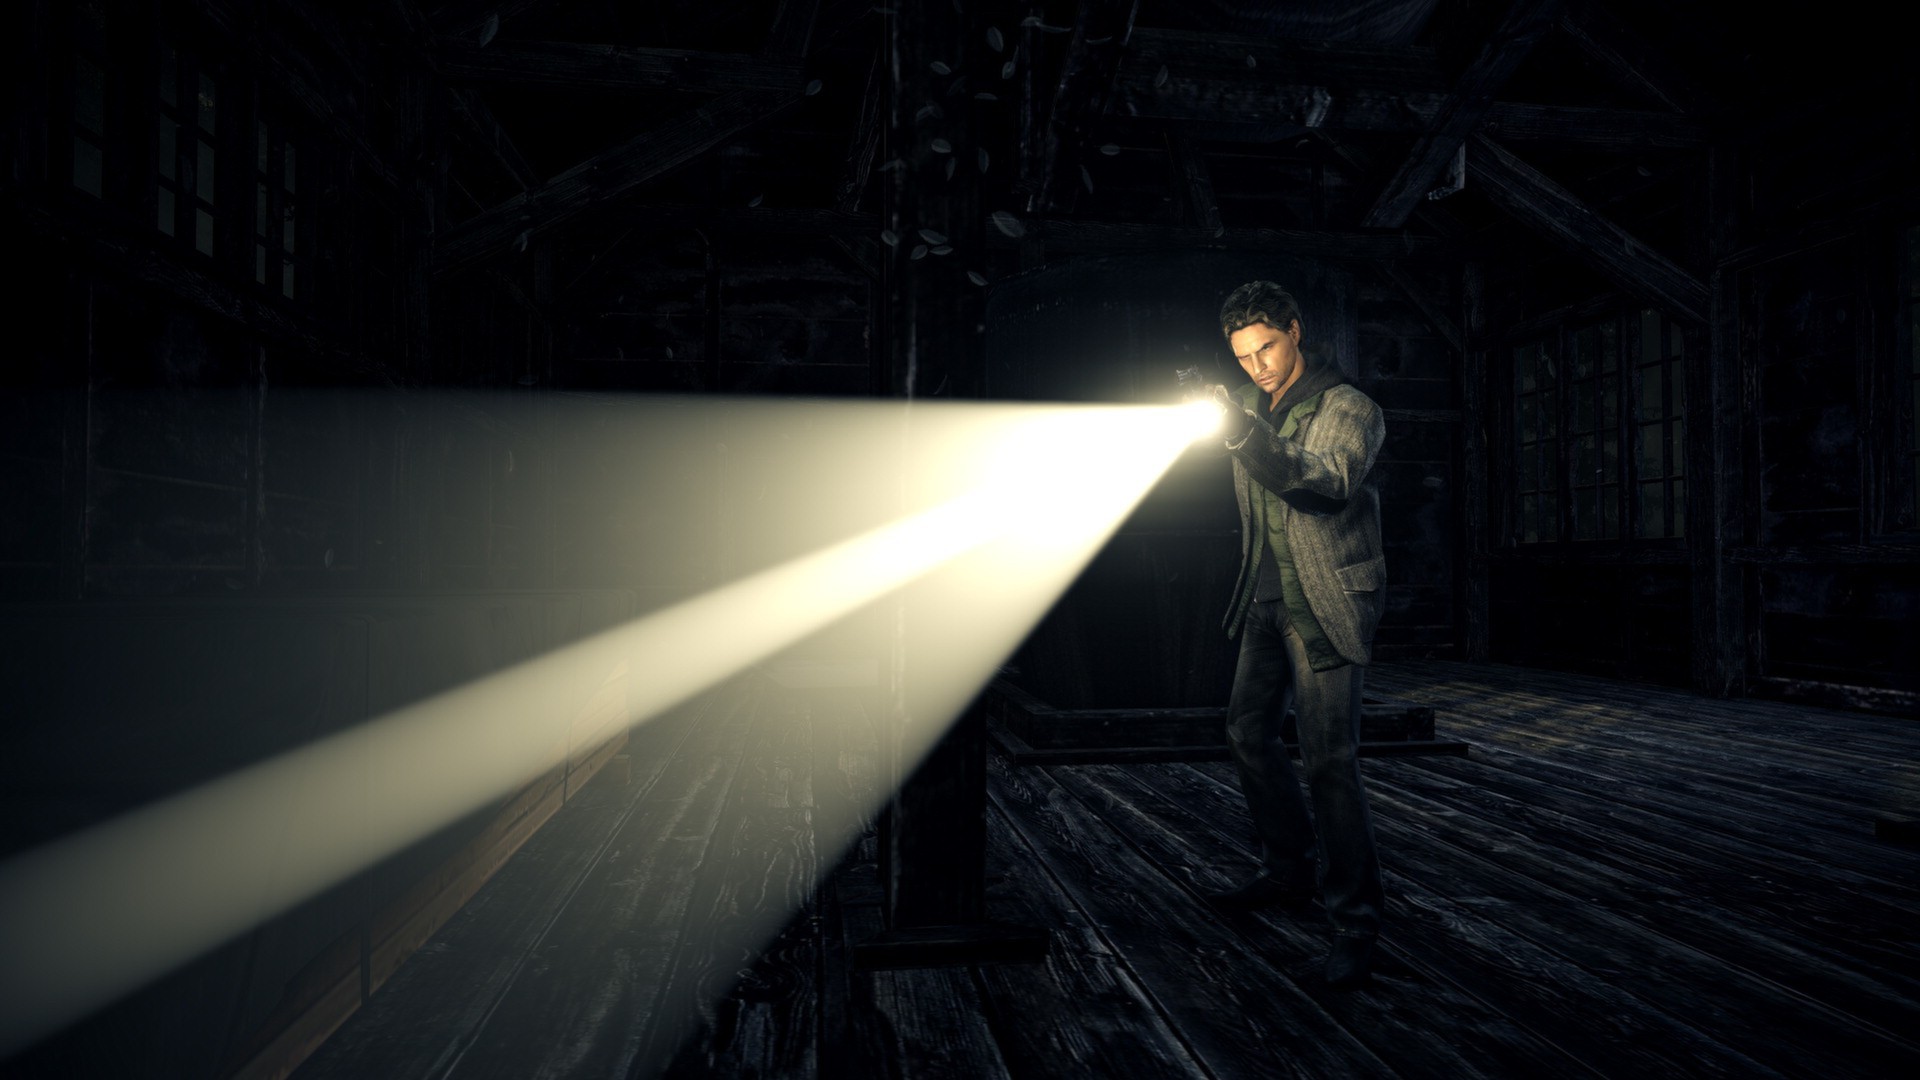 Will Alan Wake 2 Release on Steam? - Gameranx